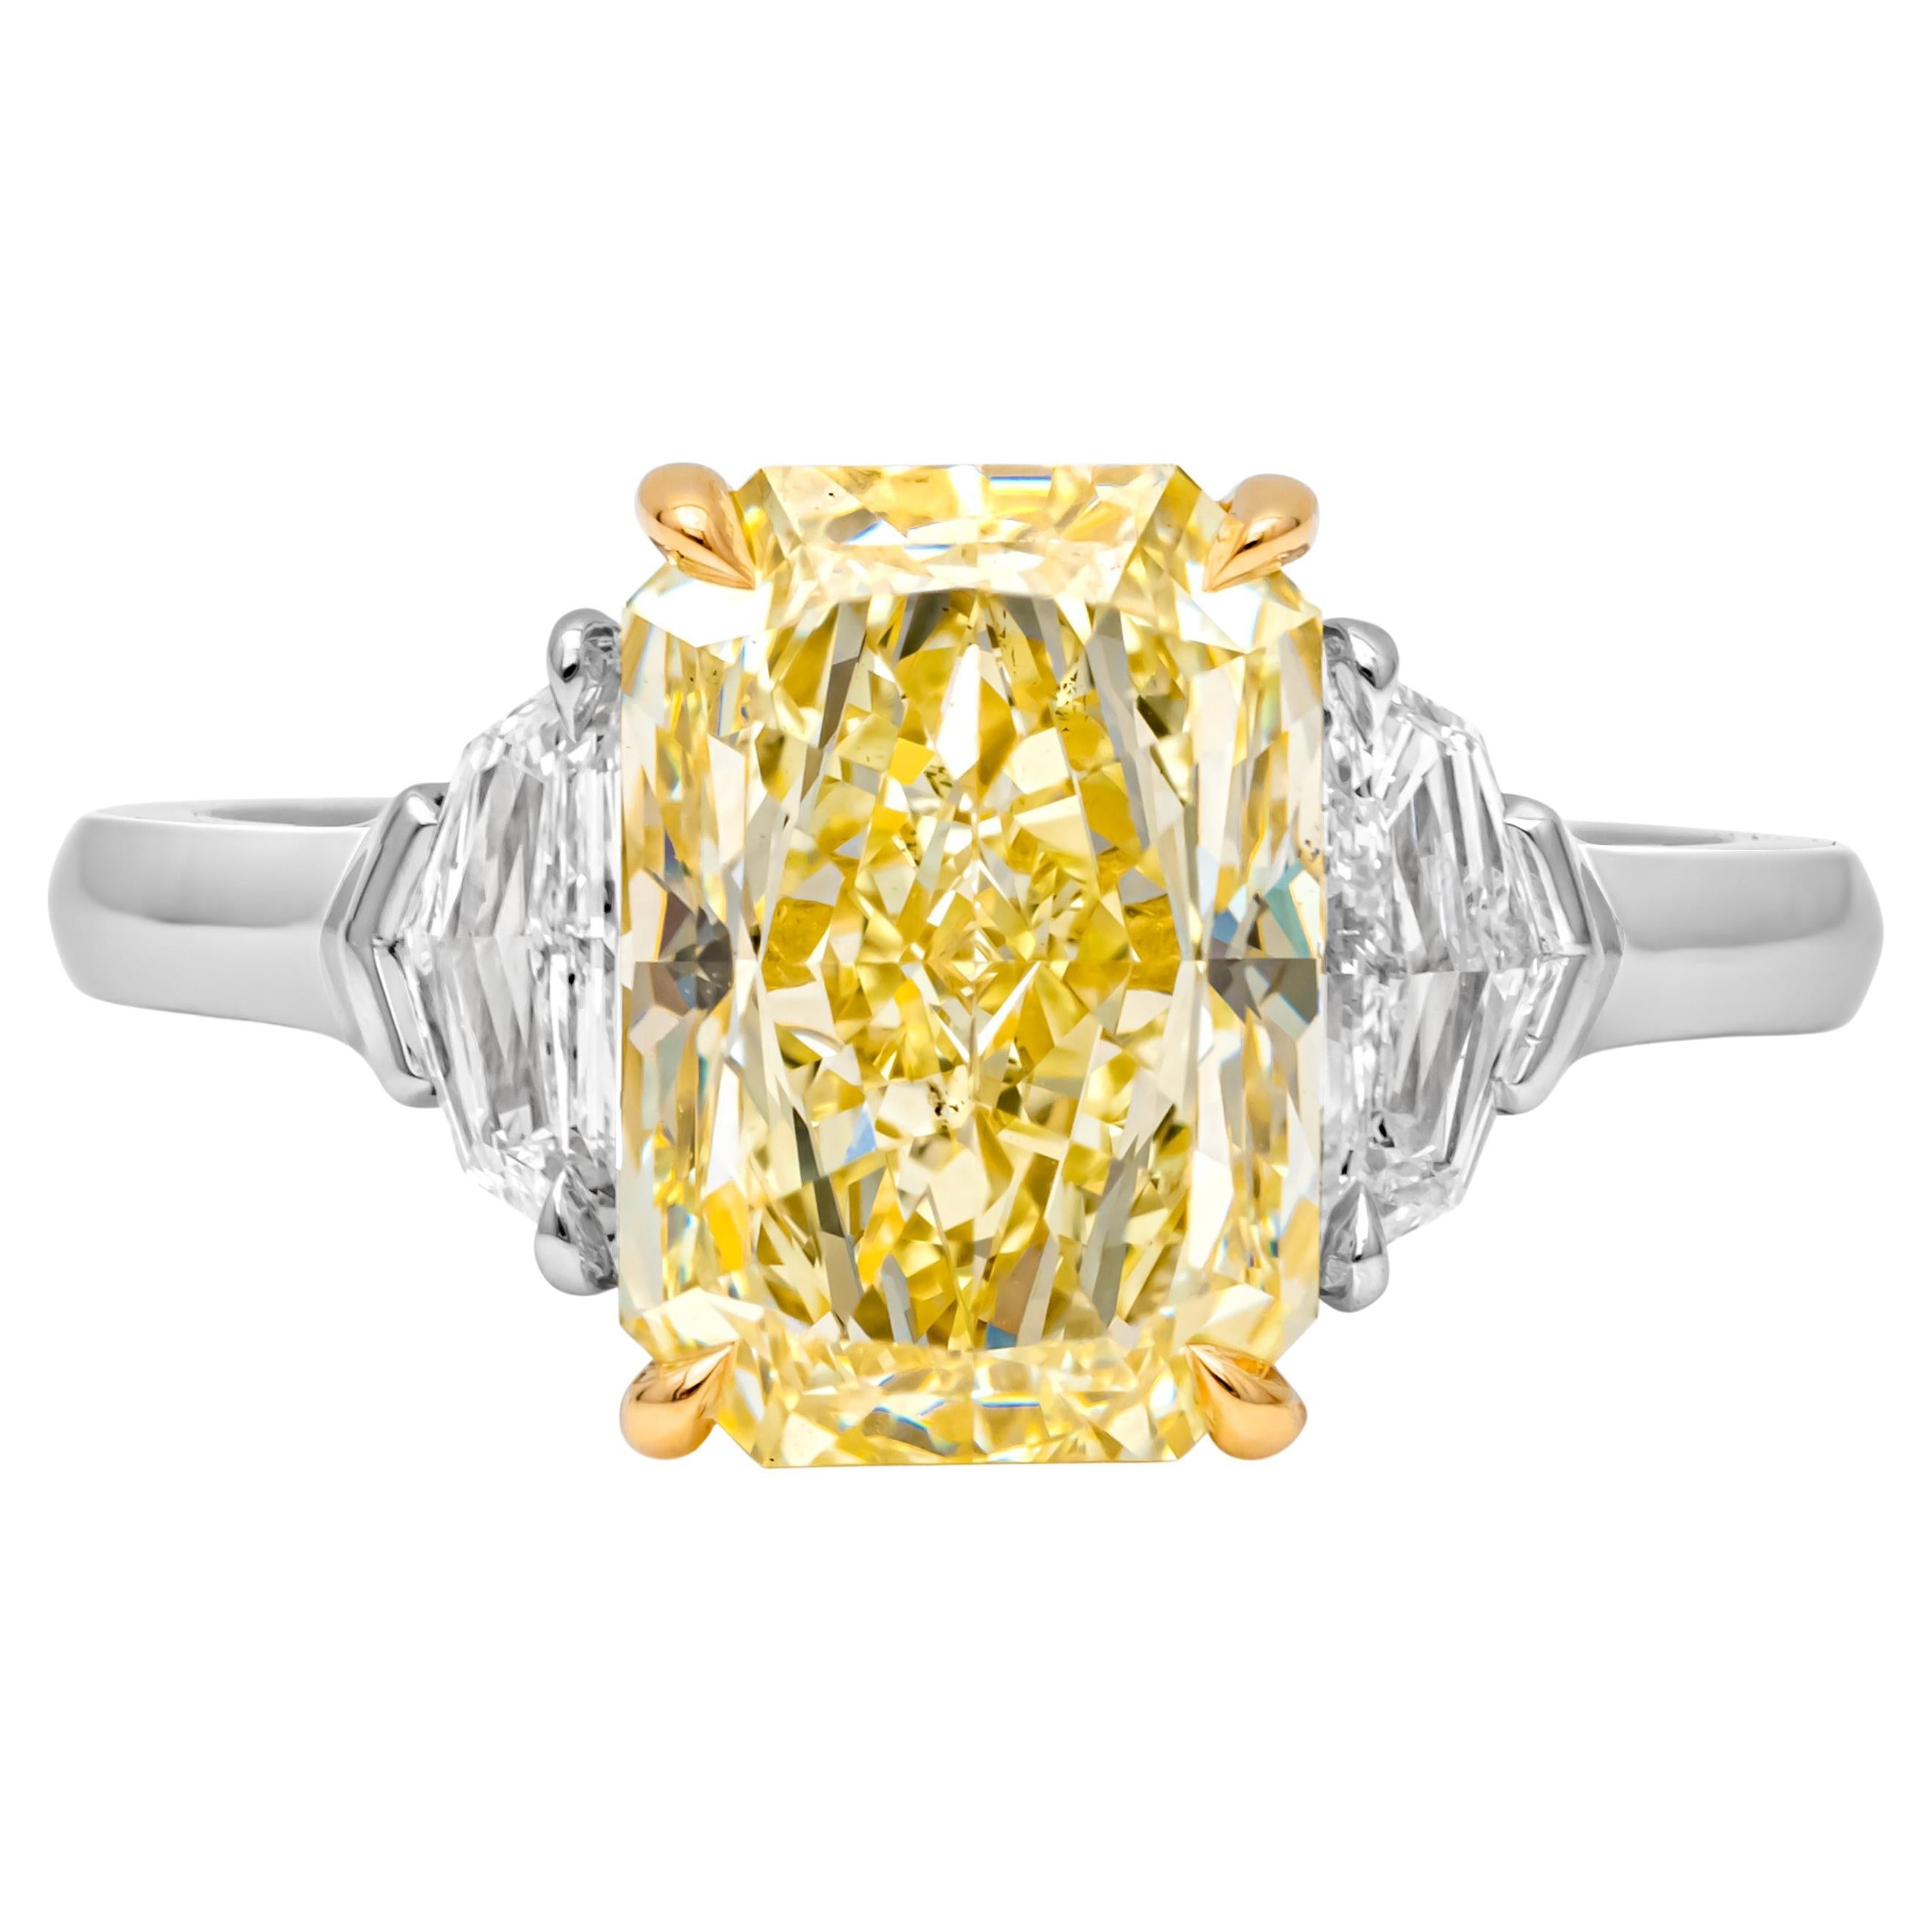 GIA Certified 4.02 Carats Radiant Cut Fancy Yellow Diamond Ring